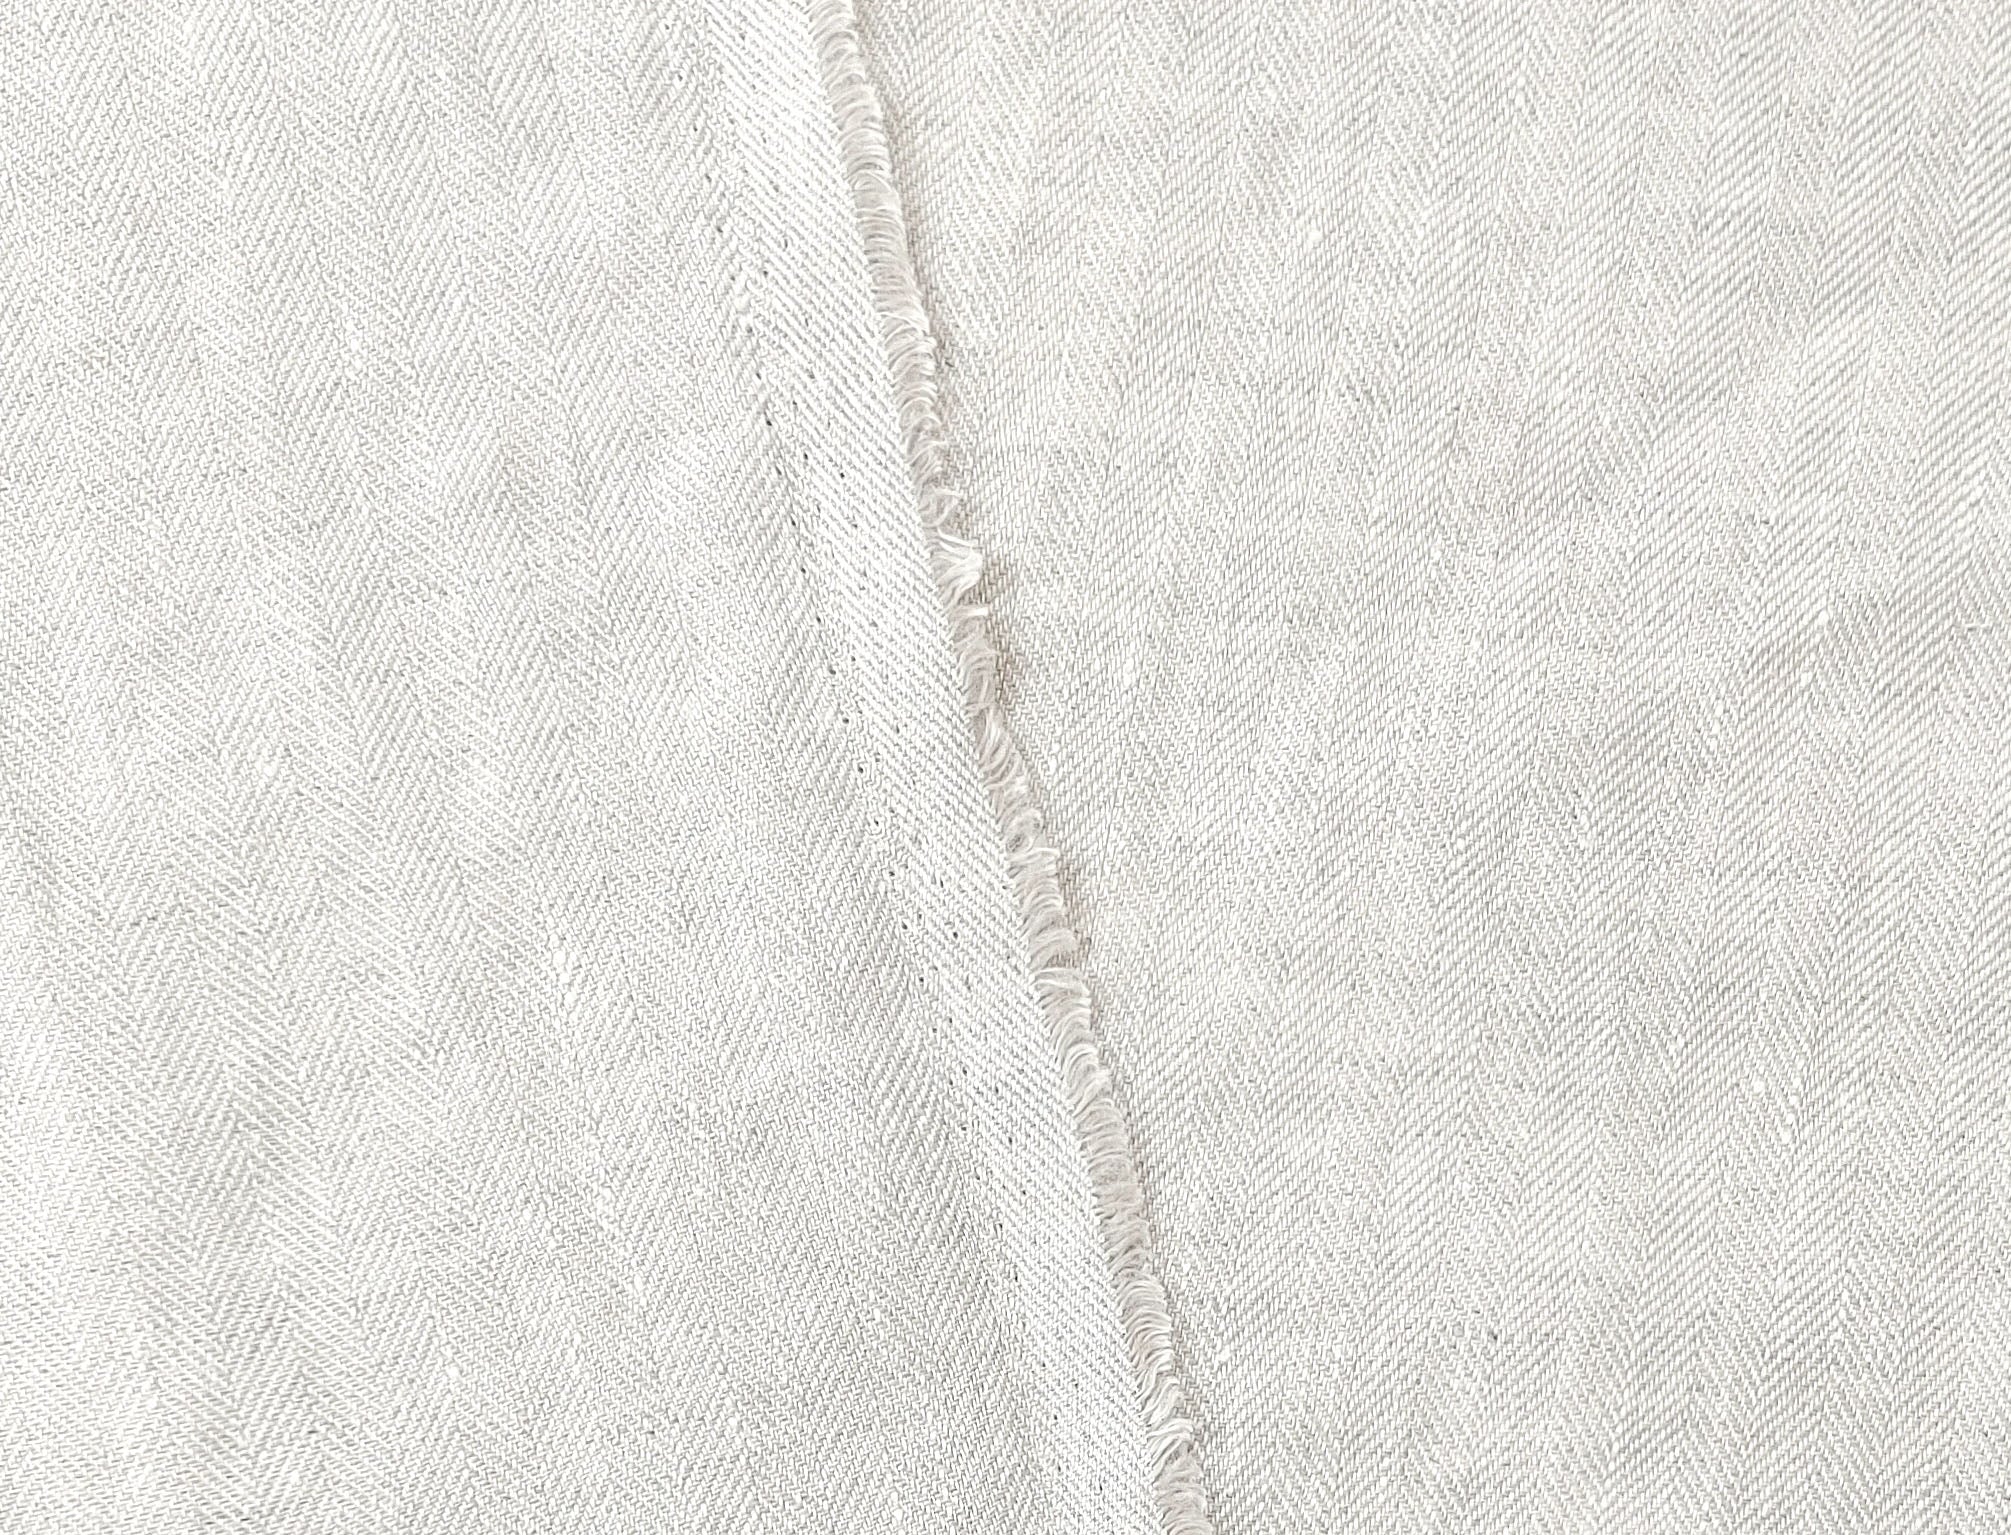 100% Linen Herringbone Twill HBT Fabric medium weight chambray 7313 7314 7727 7529 - The Linen Lab - Khaki